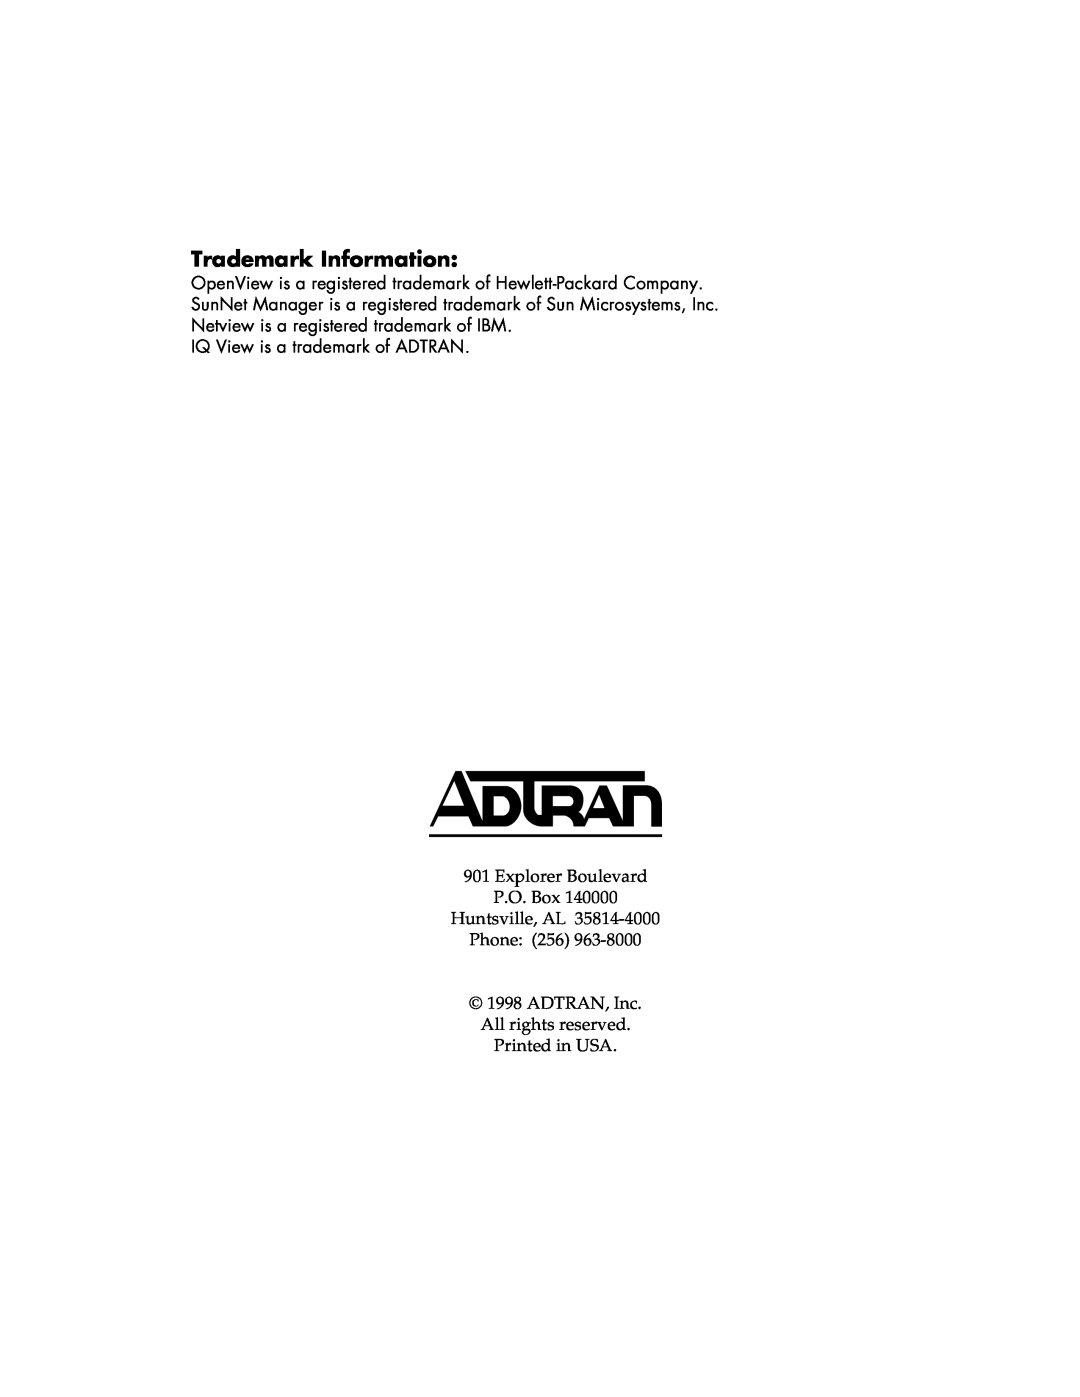 ADTRAN 1200350L1 user manual Trademark Information, IQ View is a trademark of ADTRAN 